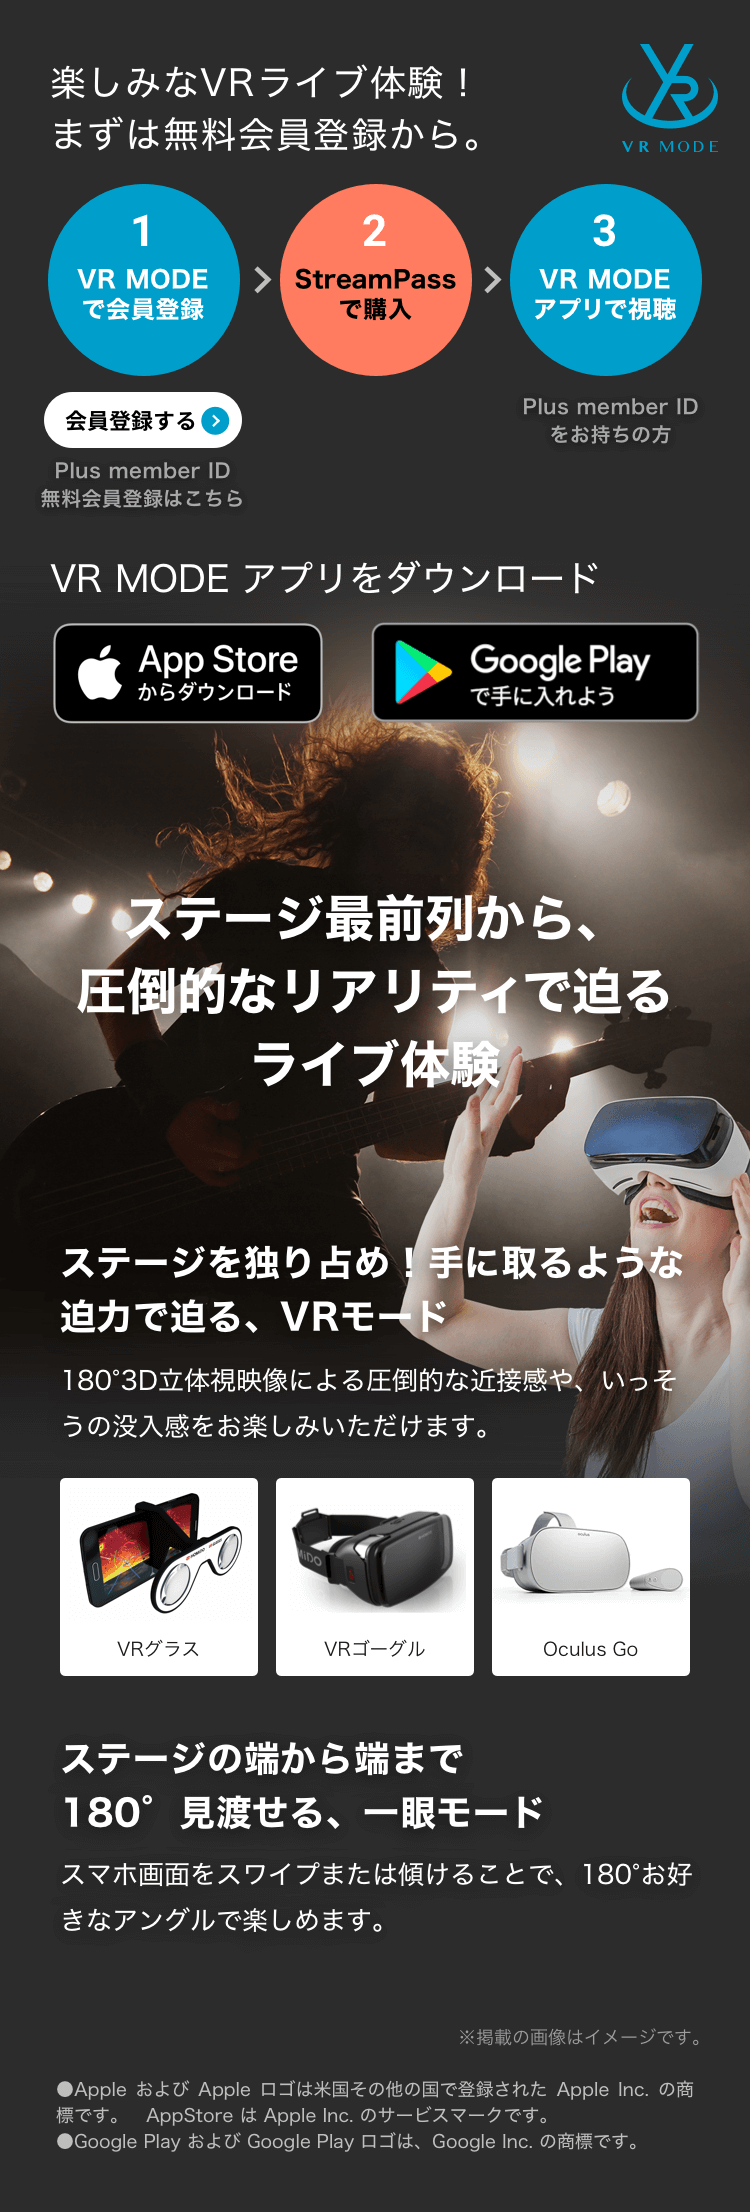 Hanabi Live We Love Namie Online Hanabi Show Vr Mode アプリ視聴手続き Streampass アプリ視聴手続き